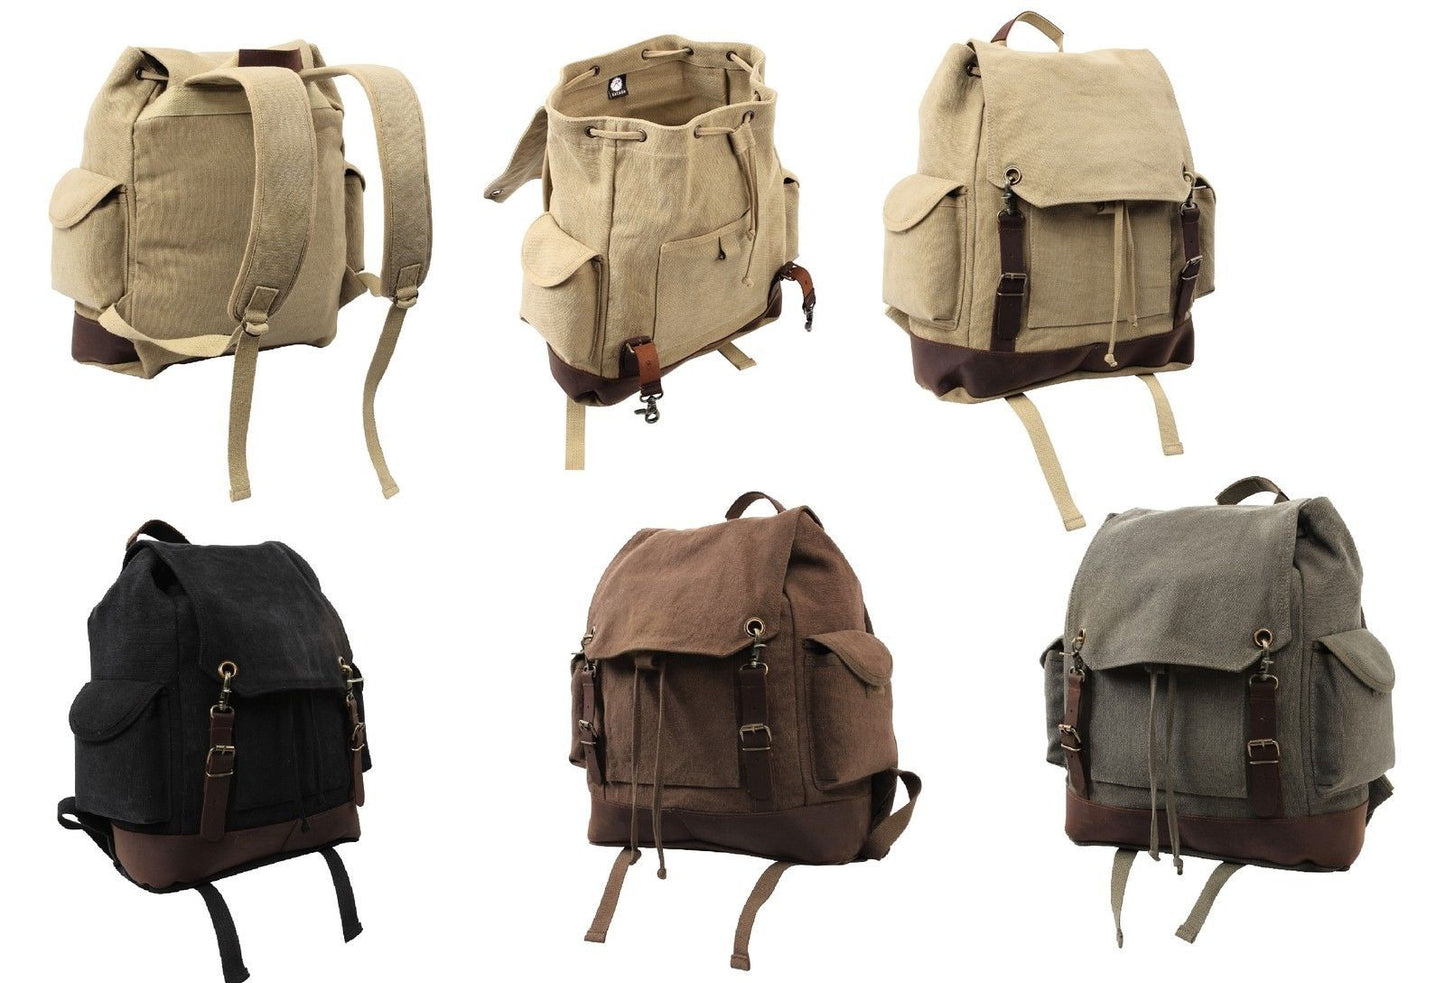 Vintage Expedition Rucksacks - Adventure Backpack Bags